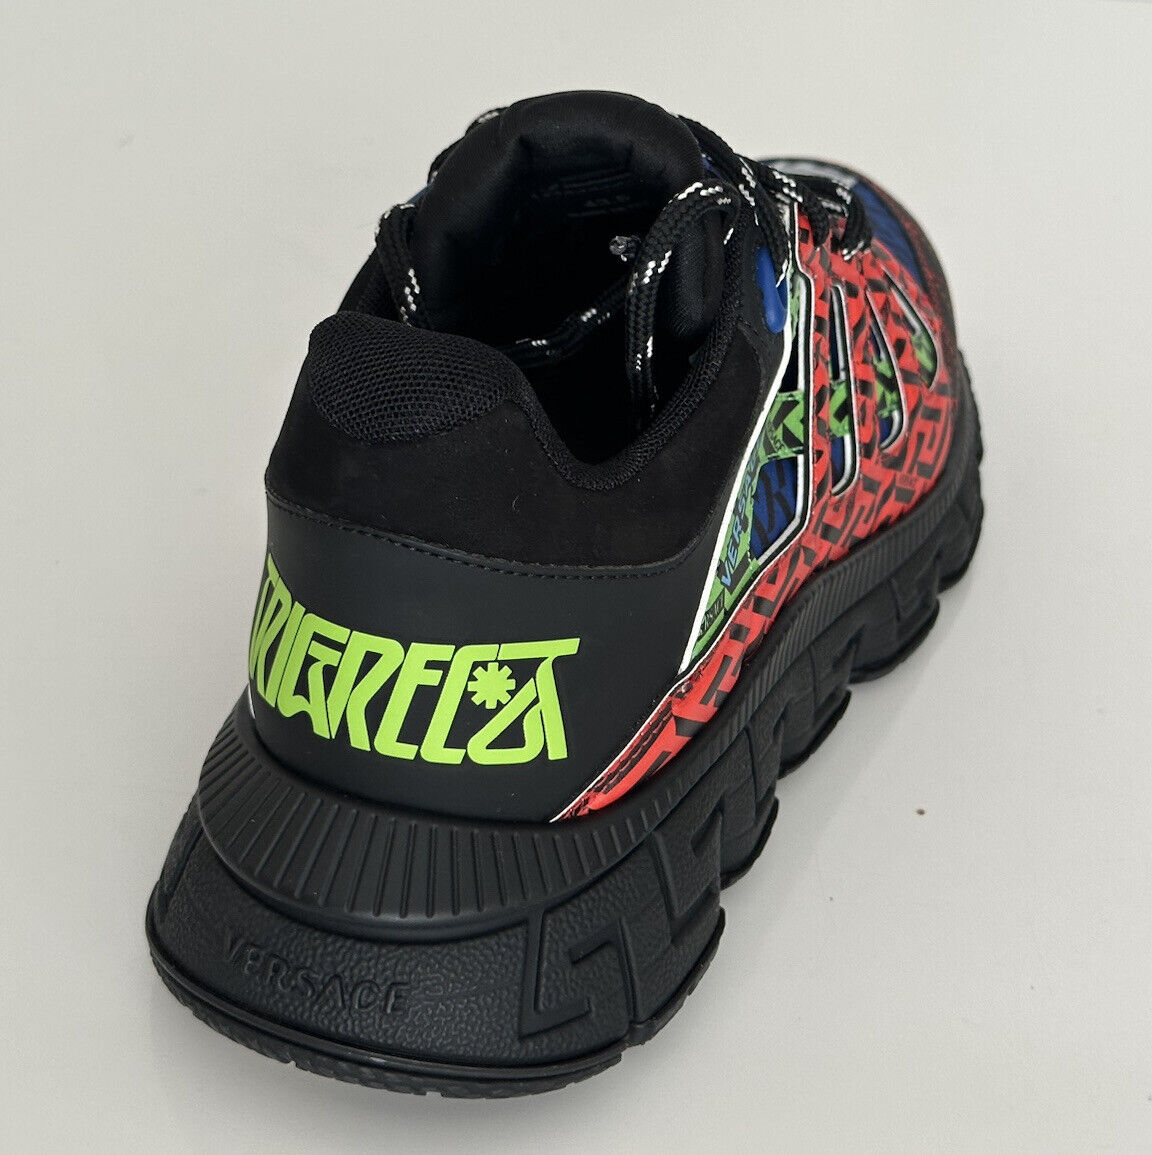 NIB Versace Men's Greca Chain Reaction Sneakers Black 13 (46 Euro) IT DSU8094 IT